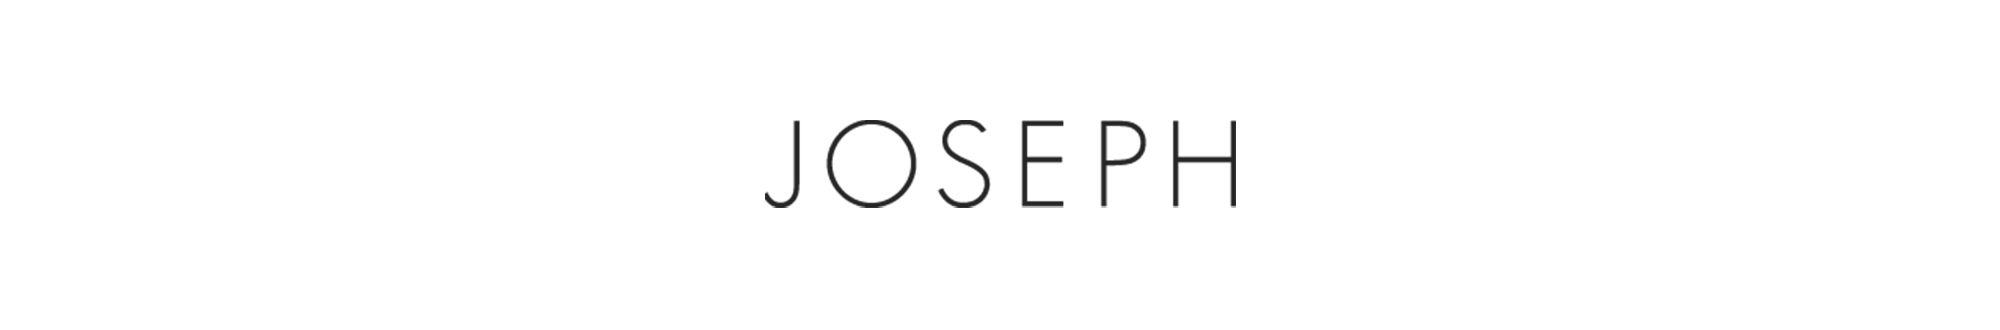 Joseph Logo - JOSEPH FASHION - A MONOCHROME STYLIZATIONHug-You